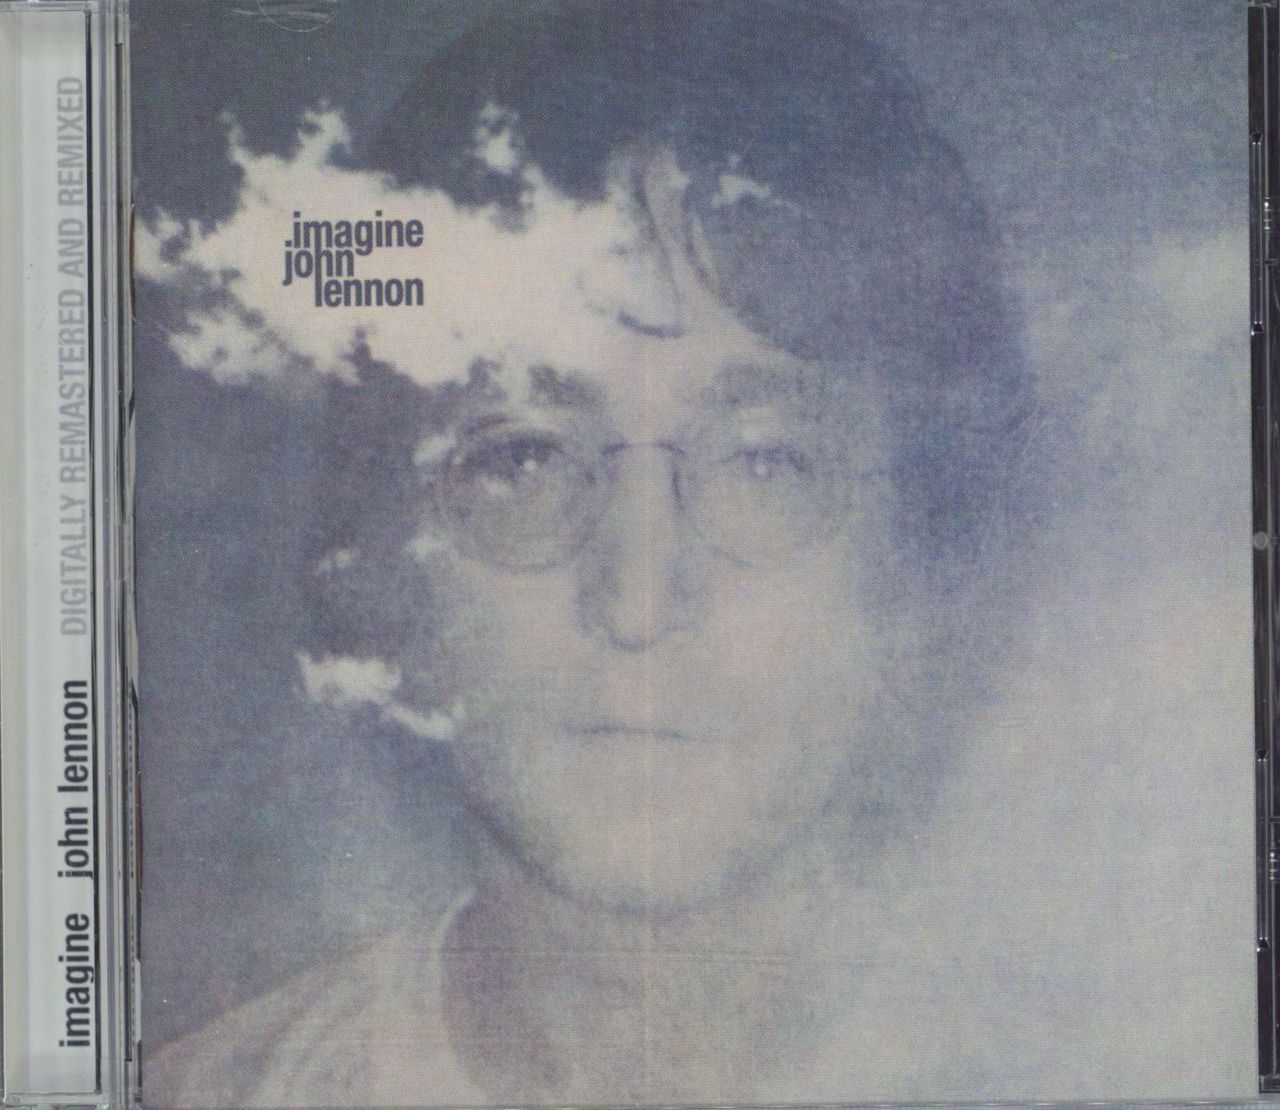 John Lennon Imagine US Promo CD album — RareVinyl.com